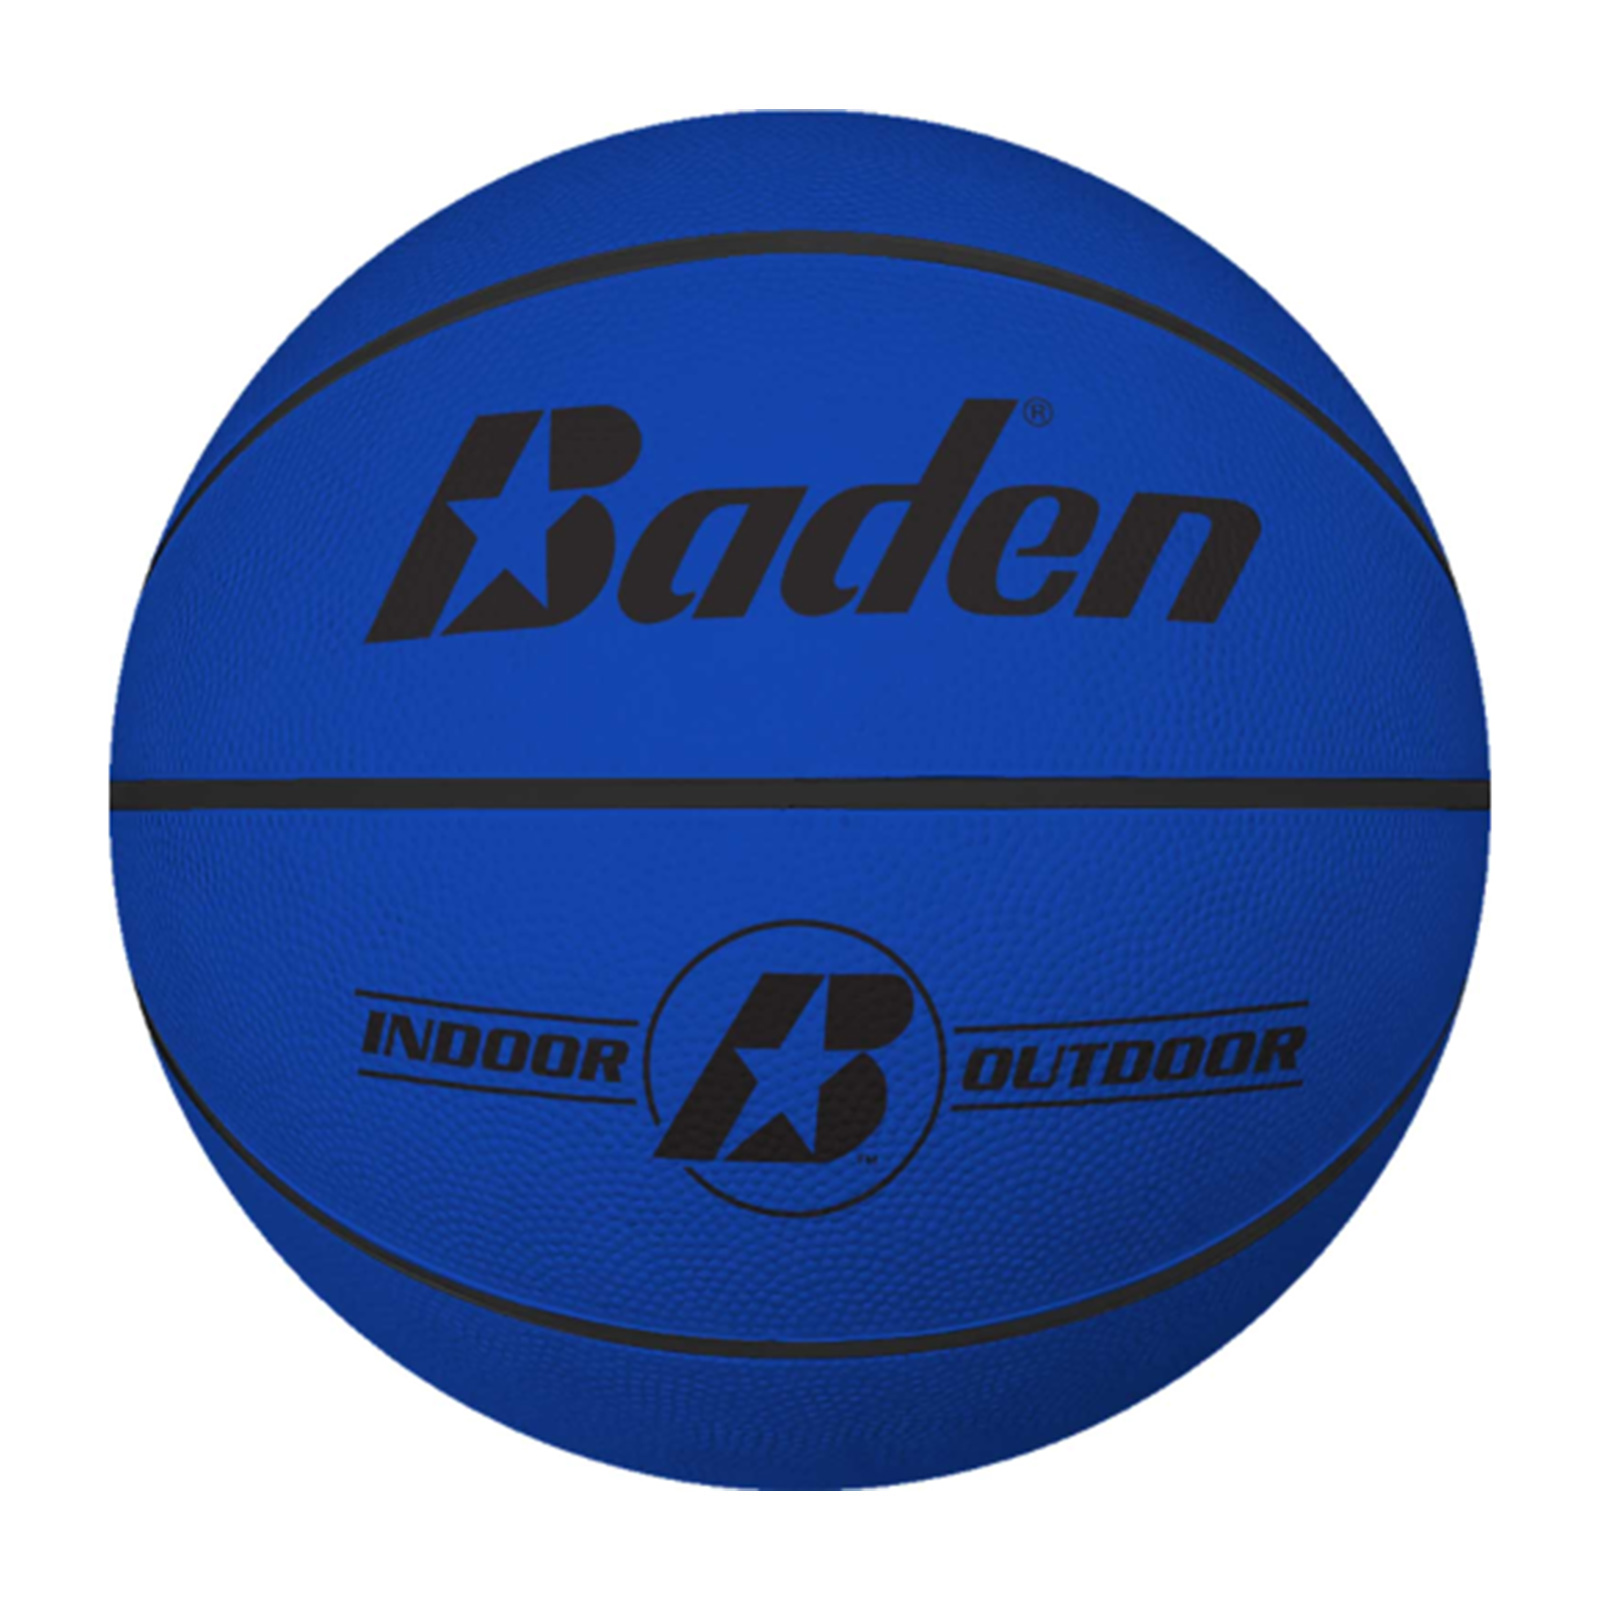 Basketball SG Rubber Coloured Size 3 Blue